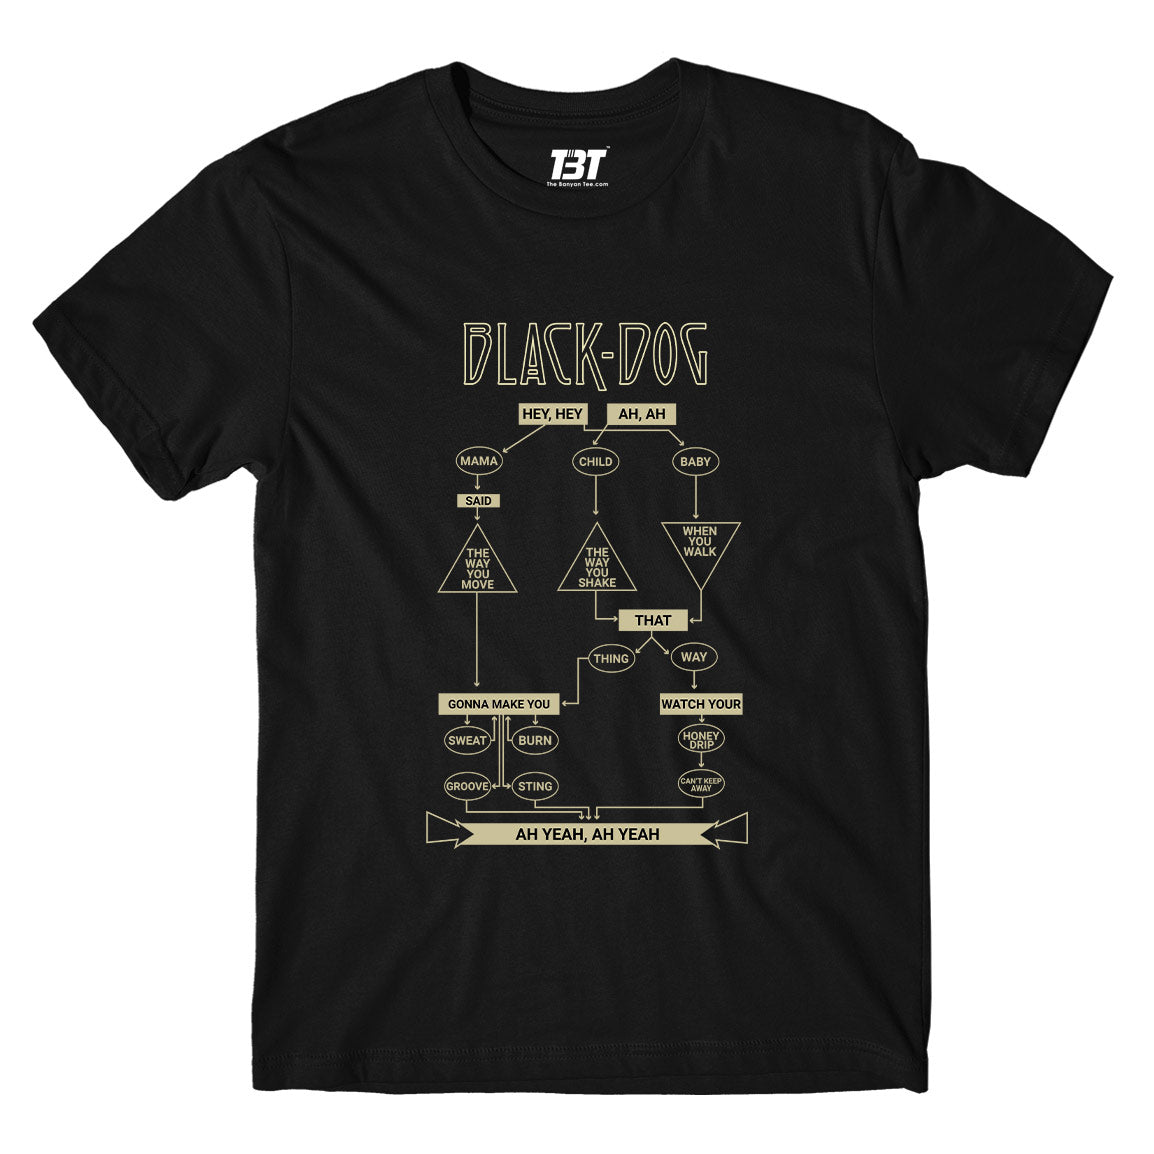 Led Zeppelin T-shirt - Black Dog T-shirt The Banyan Tee TBT